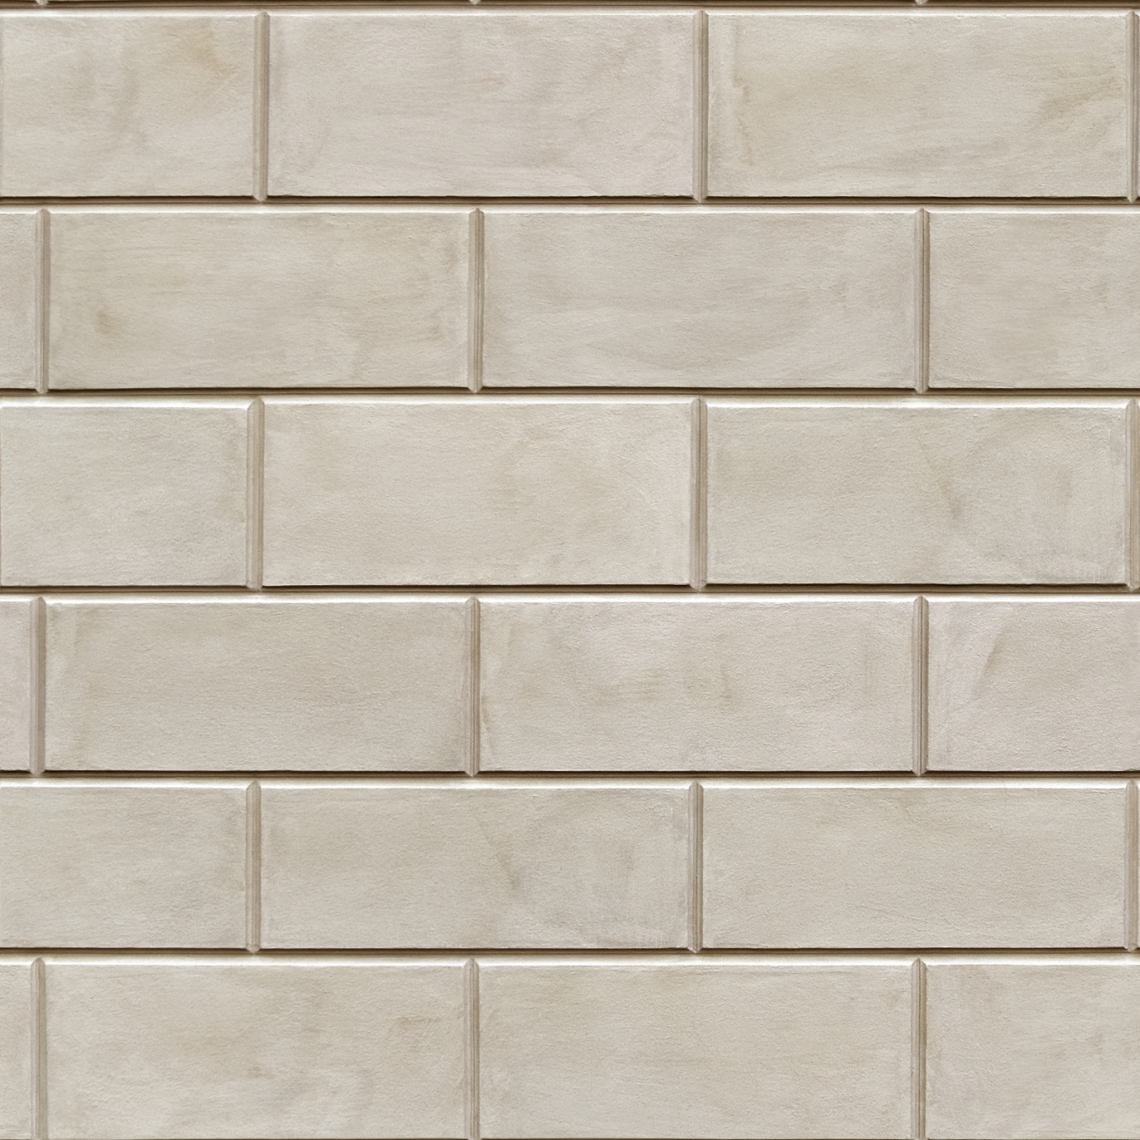 Seamless Modern Brick